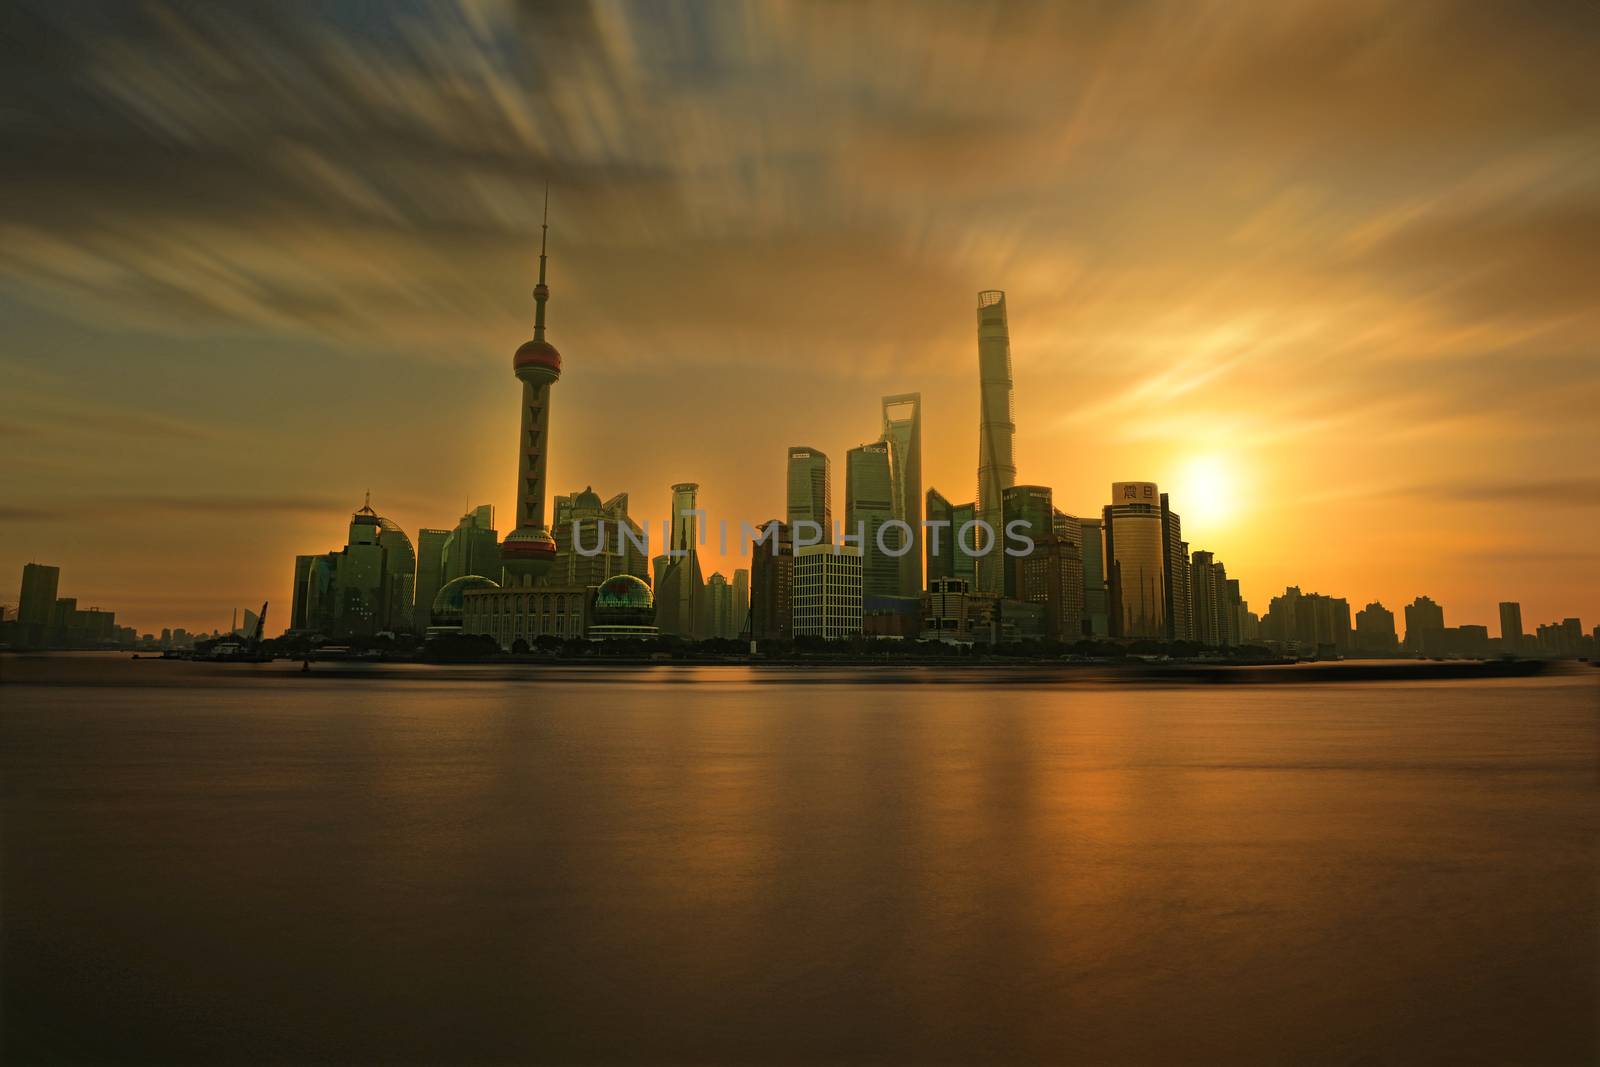 The Oriental pearl tower, Shanghai world financial center The Bund Shanghai skyline 